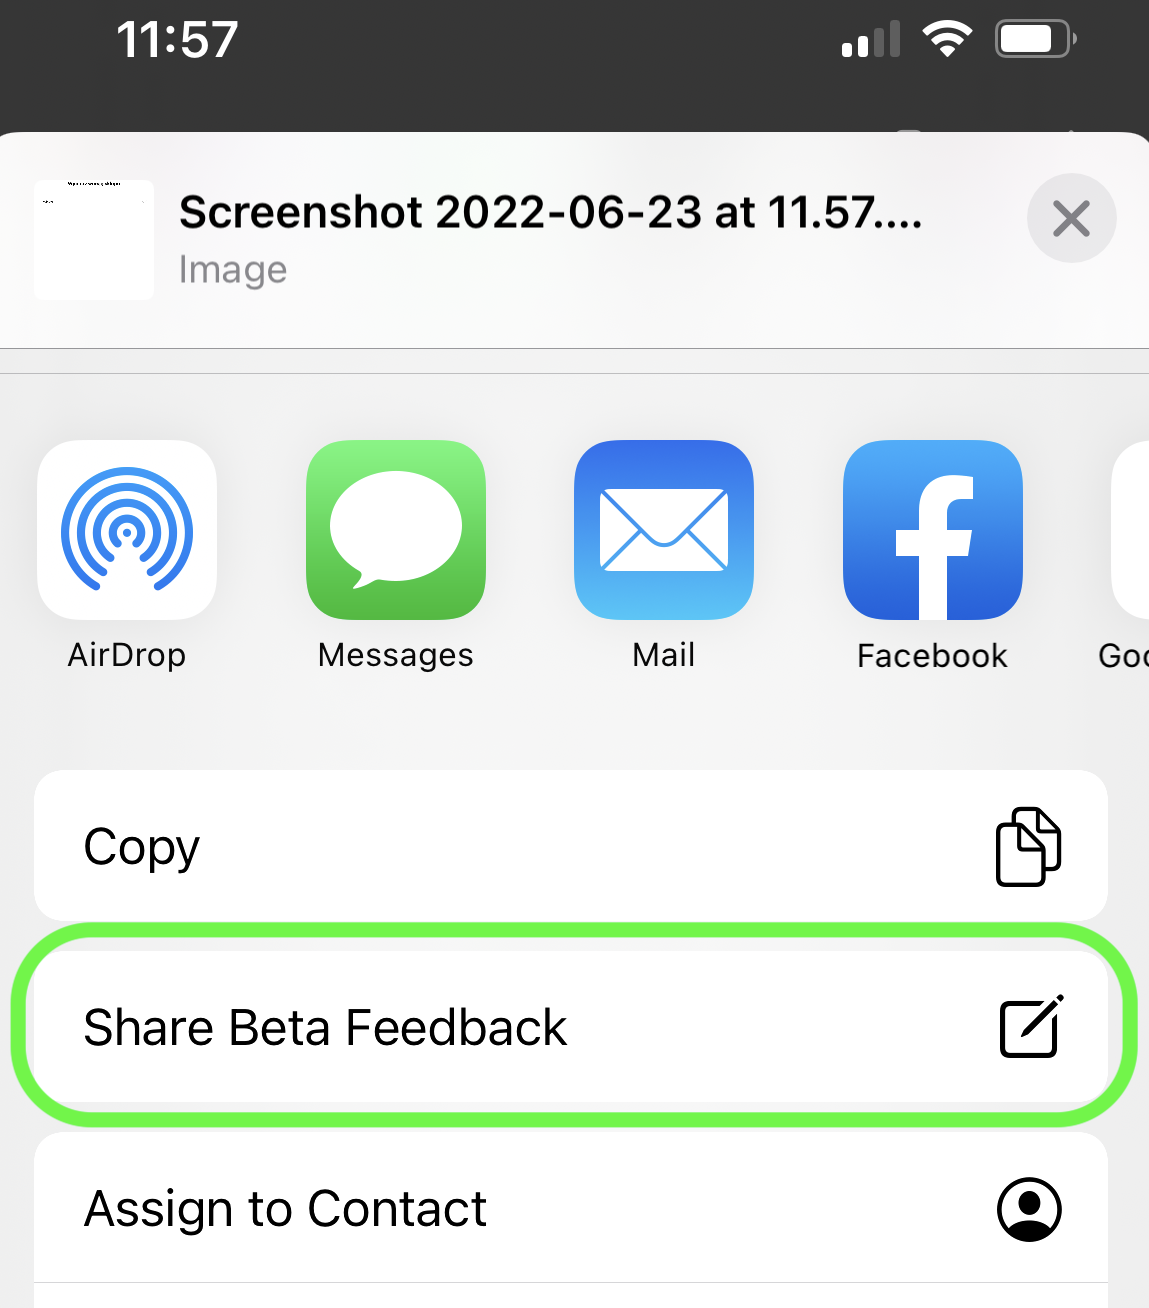 Share beta feedback with TestFlight